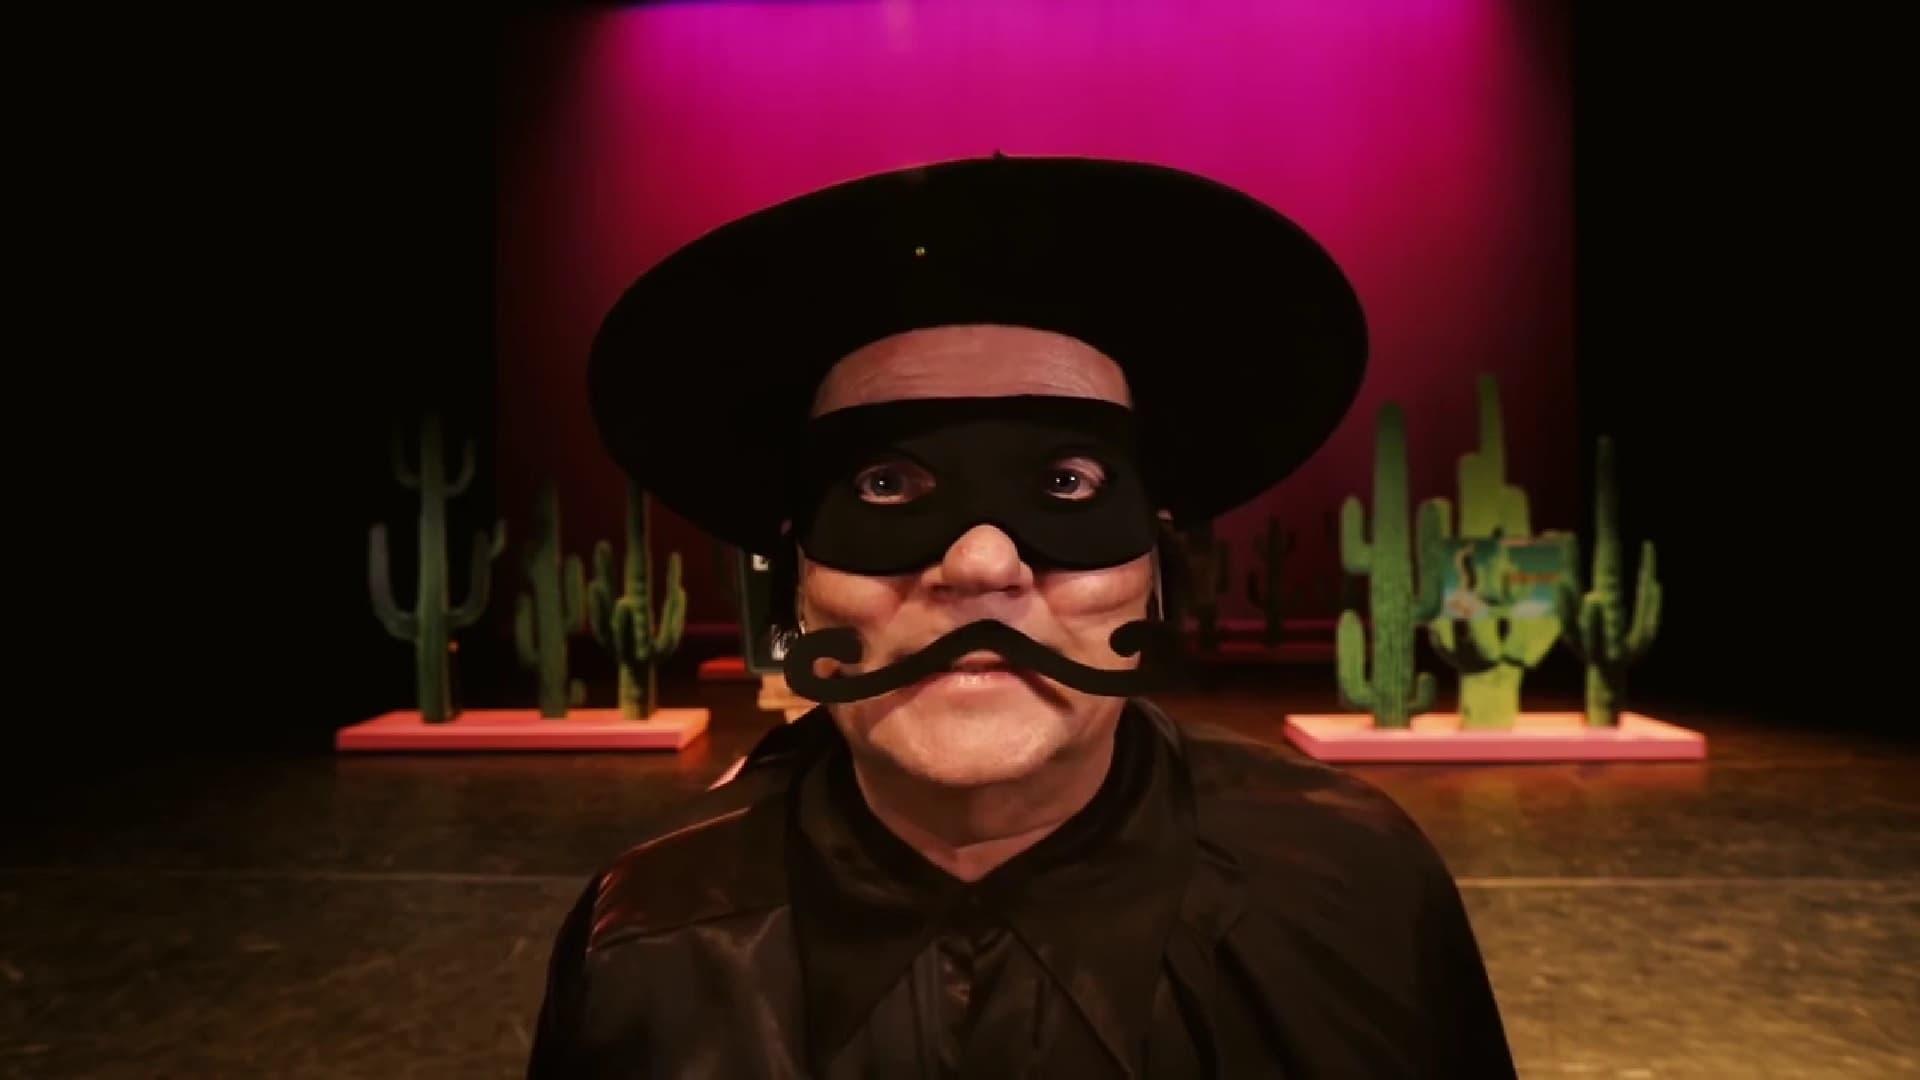 RO Theater: Snorro, de gemaskerde held backdrop